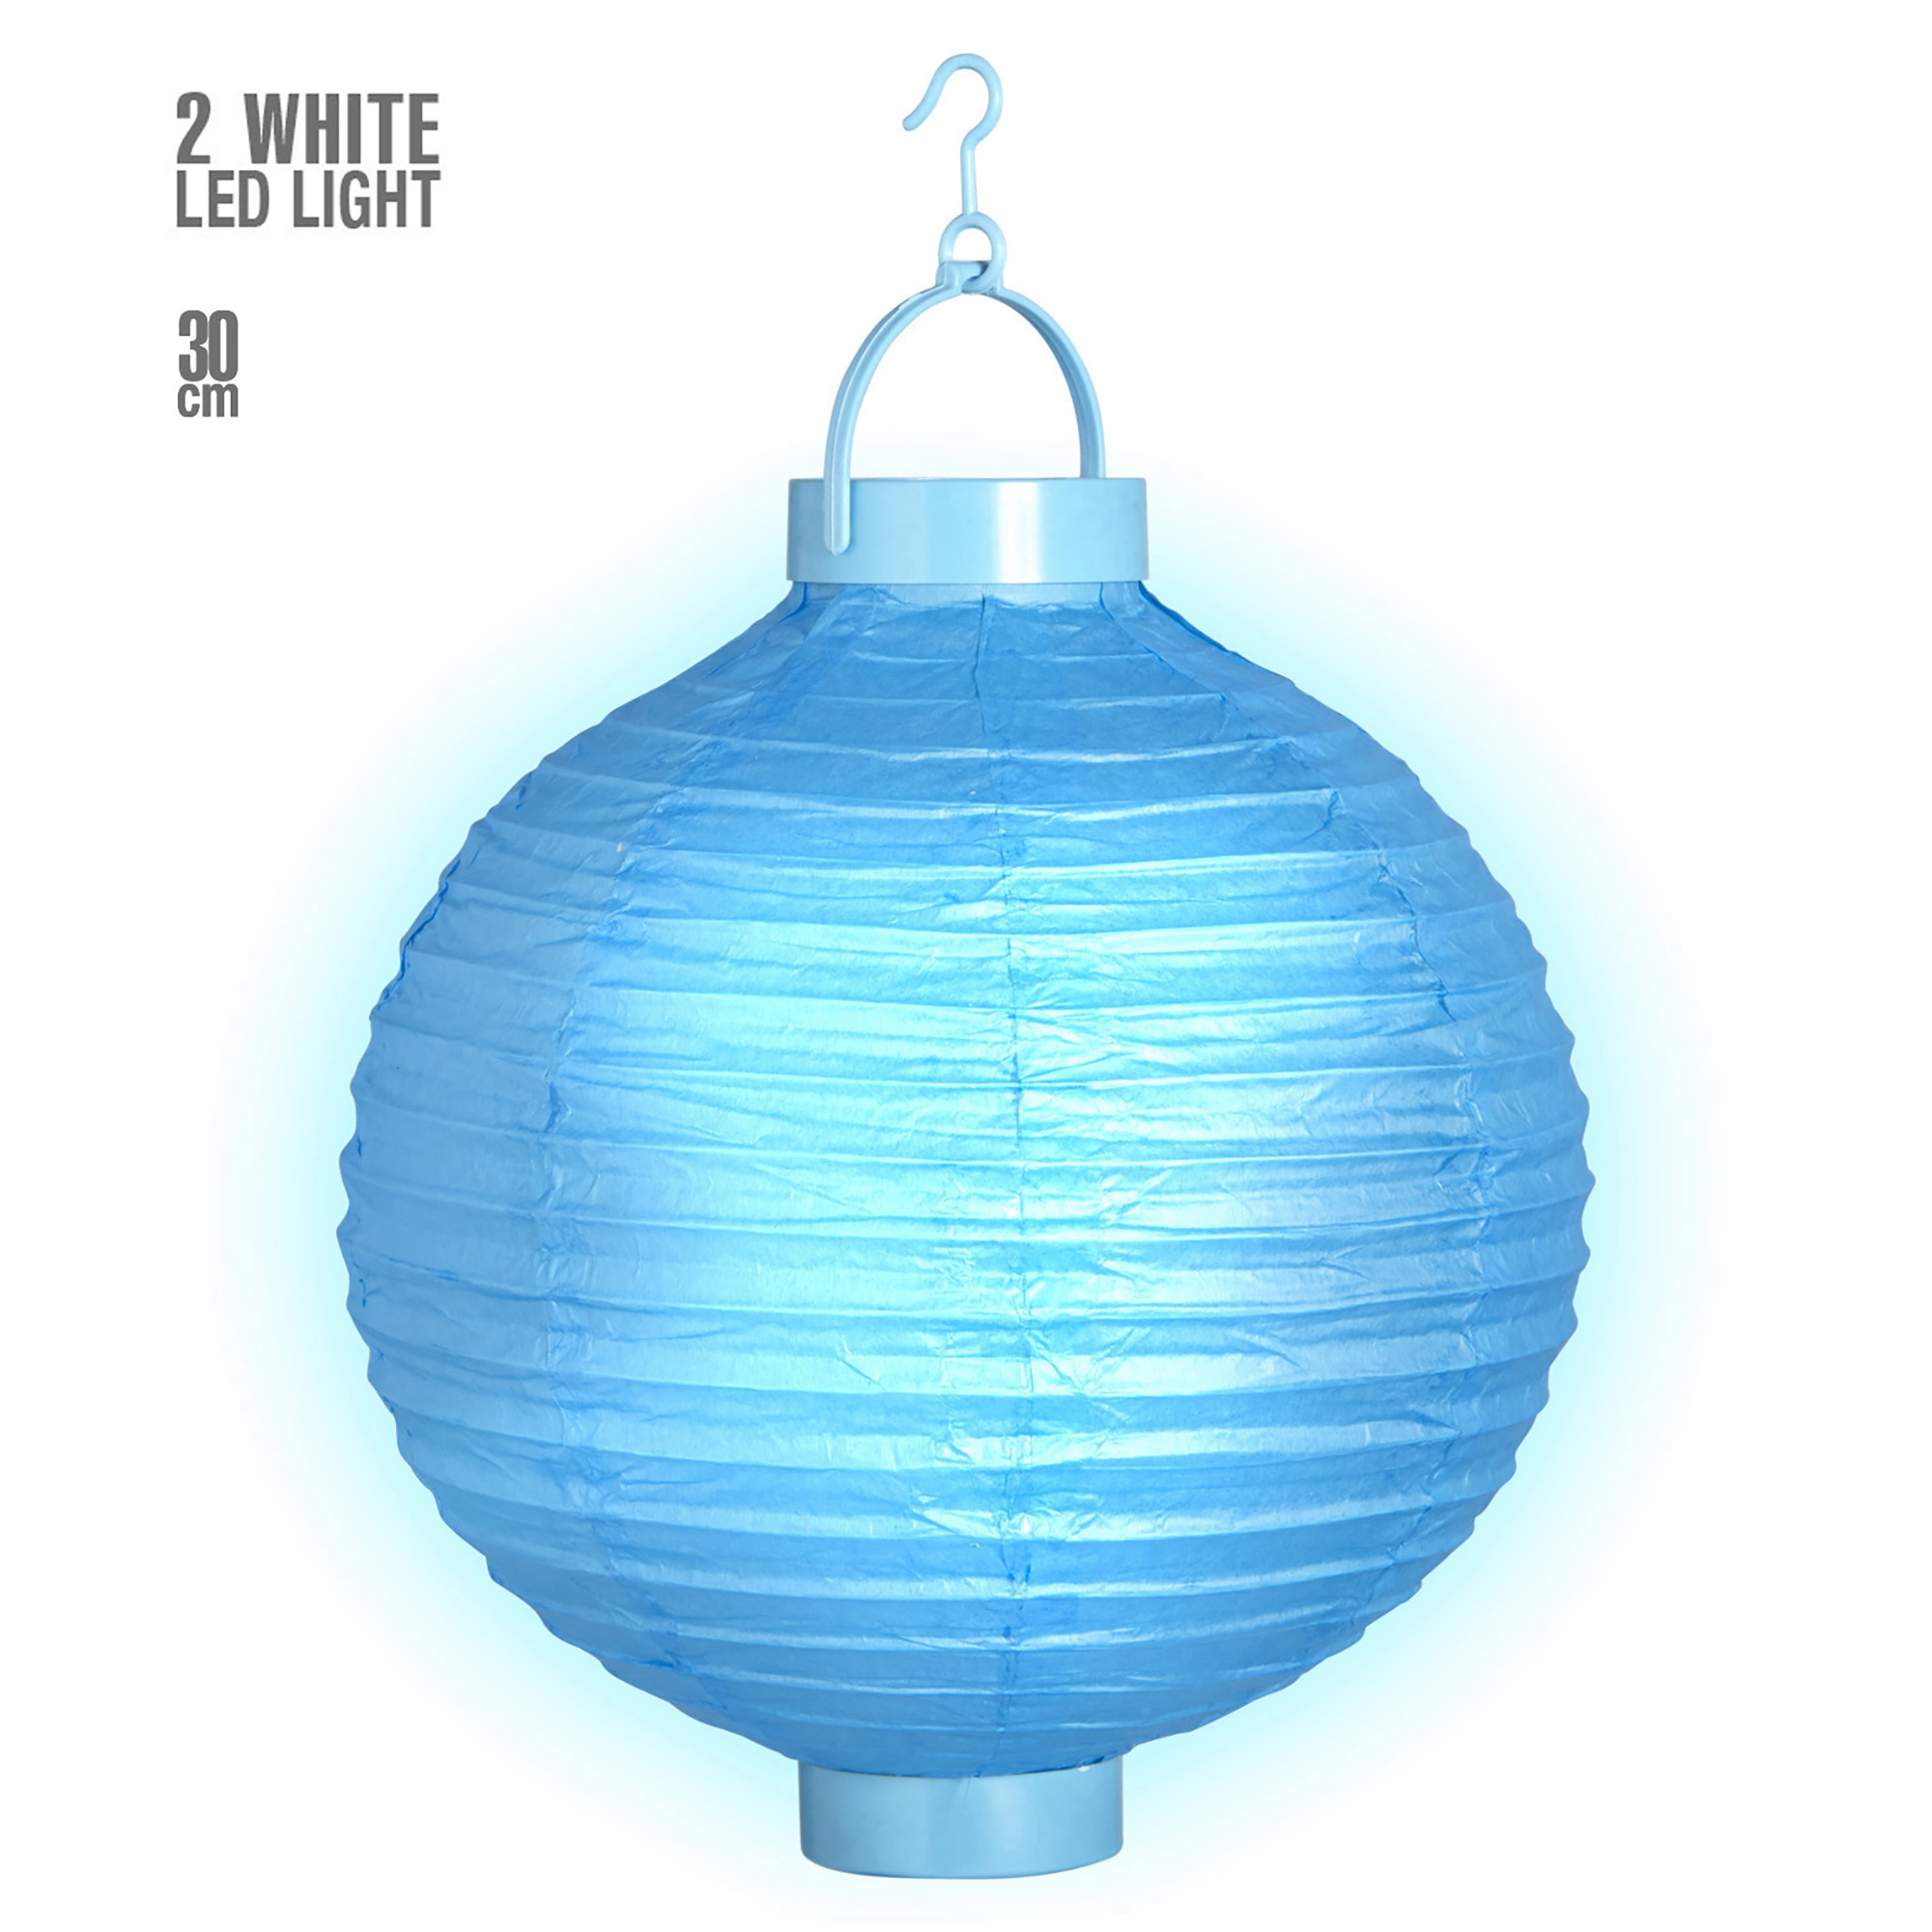 lampion met licht 30cm, blauw